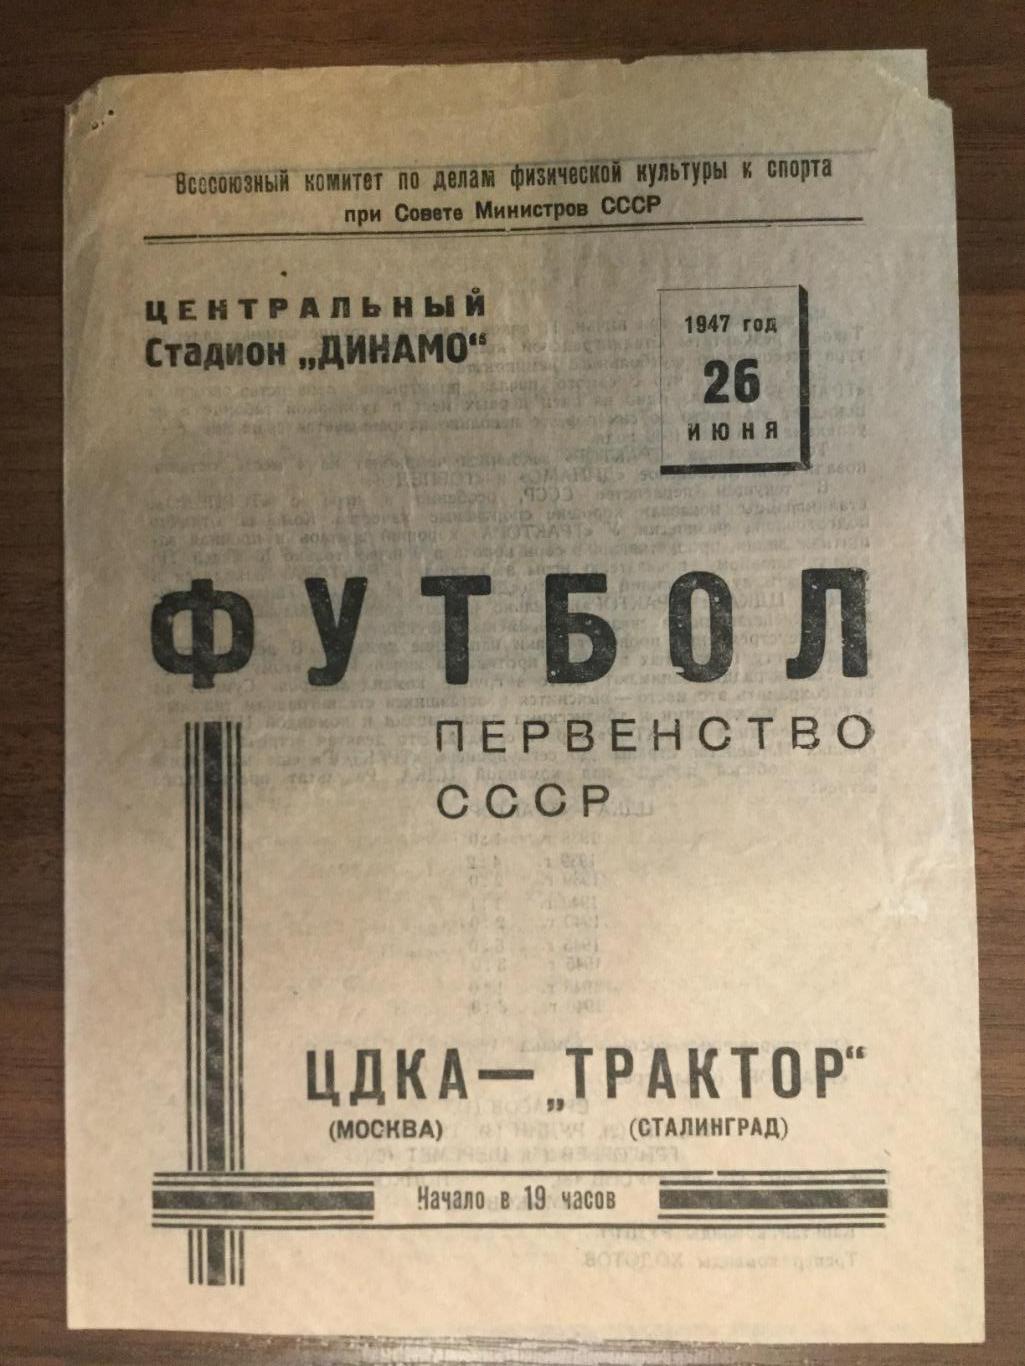 ЦДКА (ЦСКА) Москва - Трактор (Сталинград) Волгоград 1947 (26 июня)